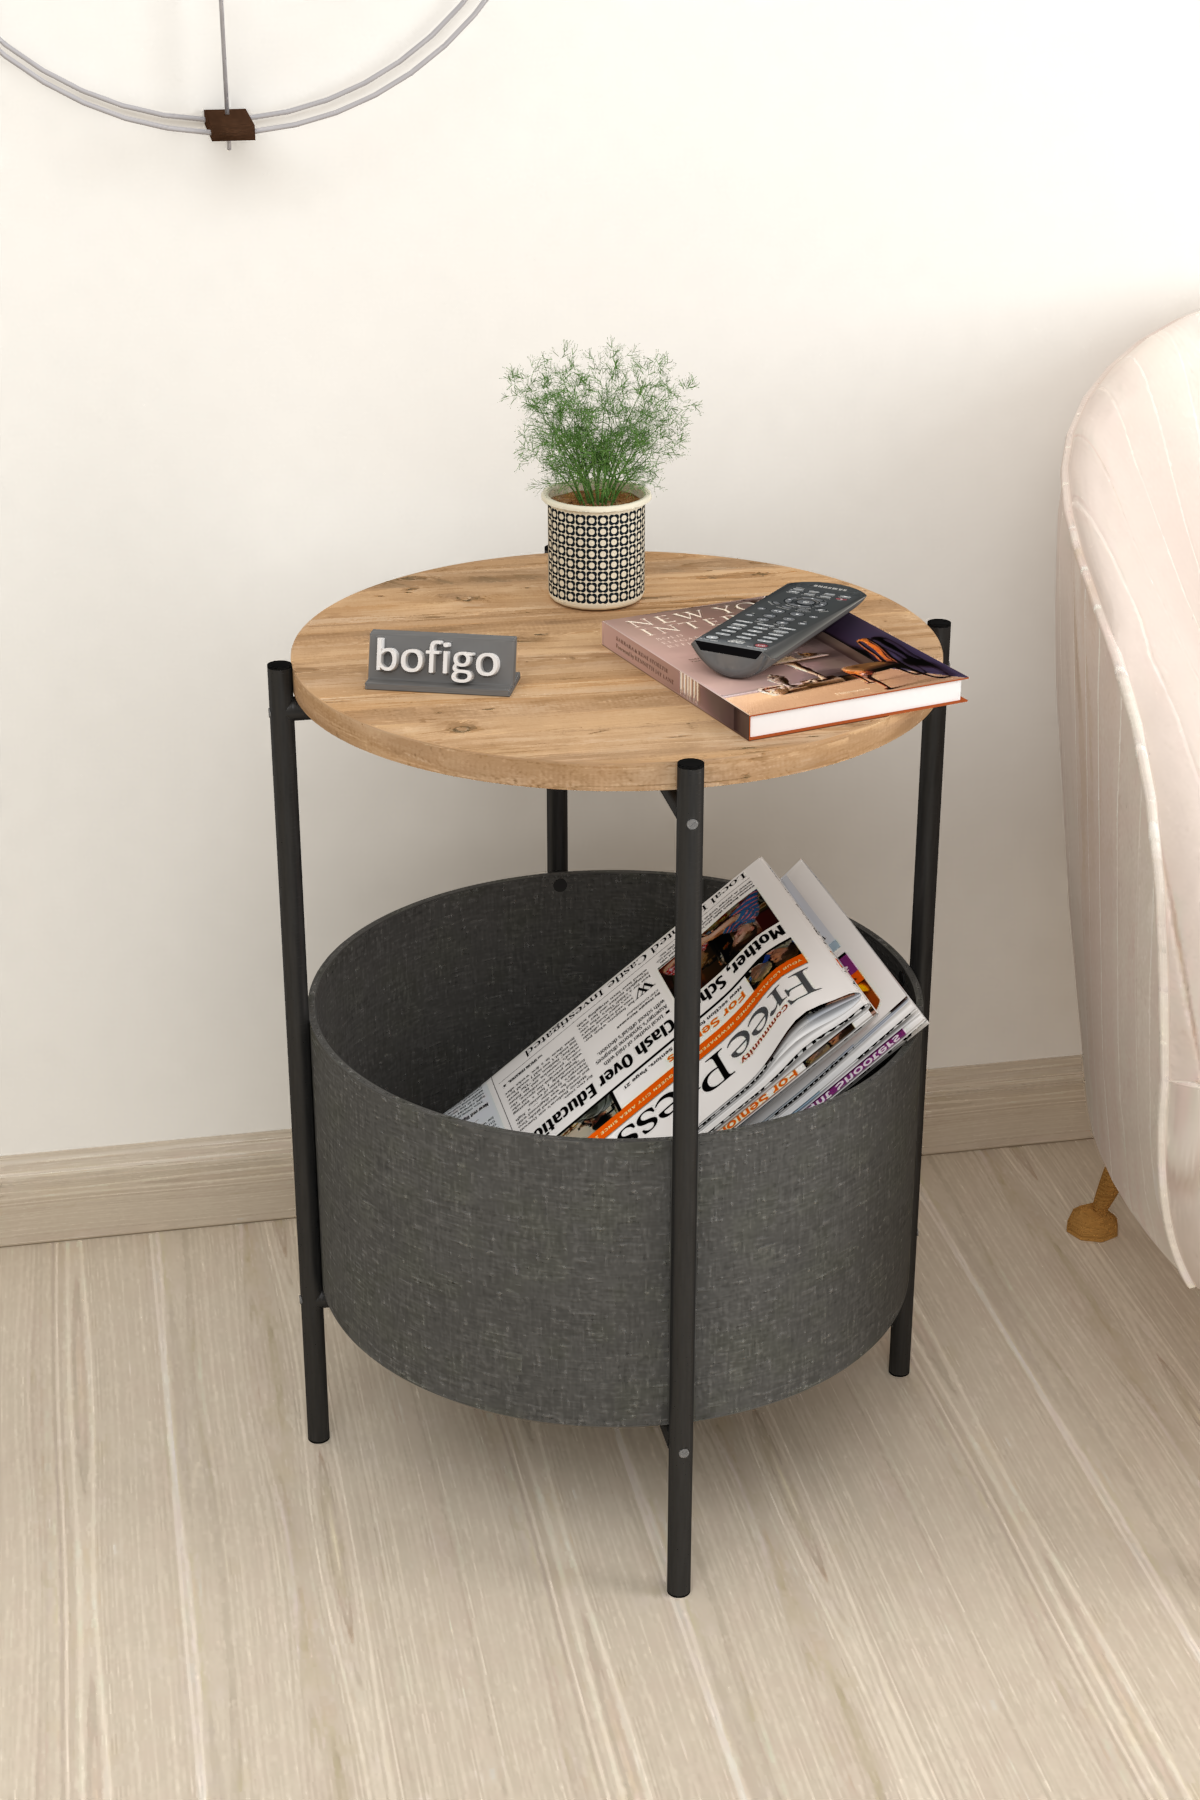 Bofigo Coffee Table with Bag Newspaper Holder Bookshelf  Flowerpot Pine